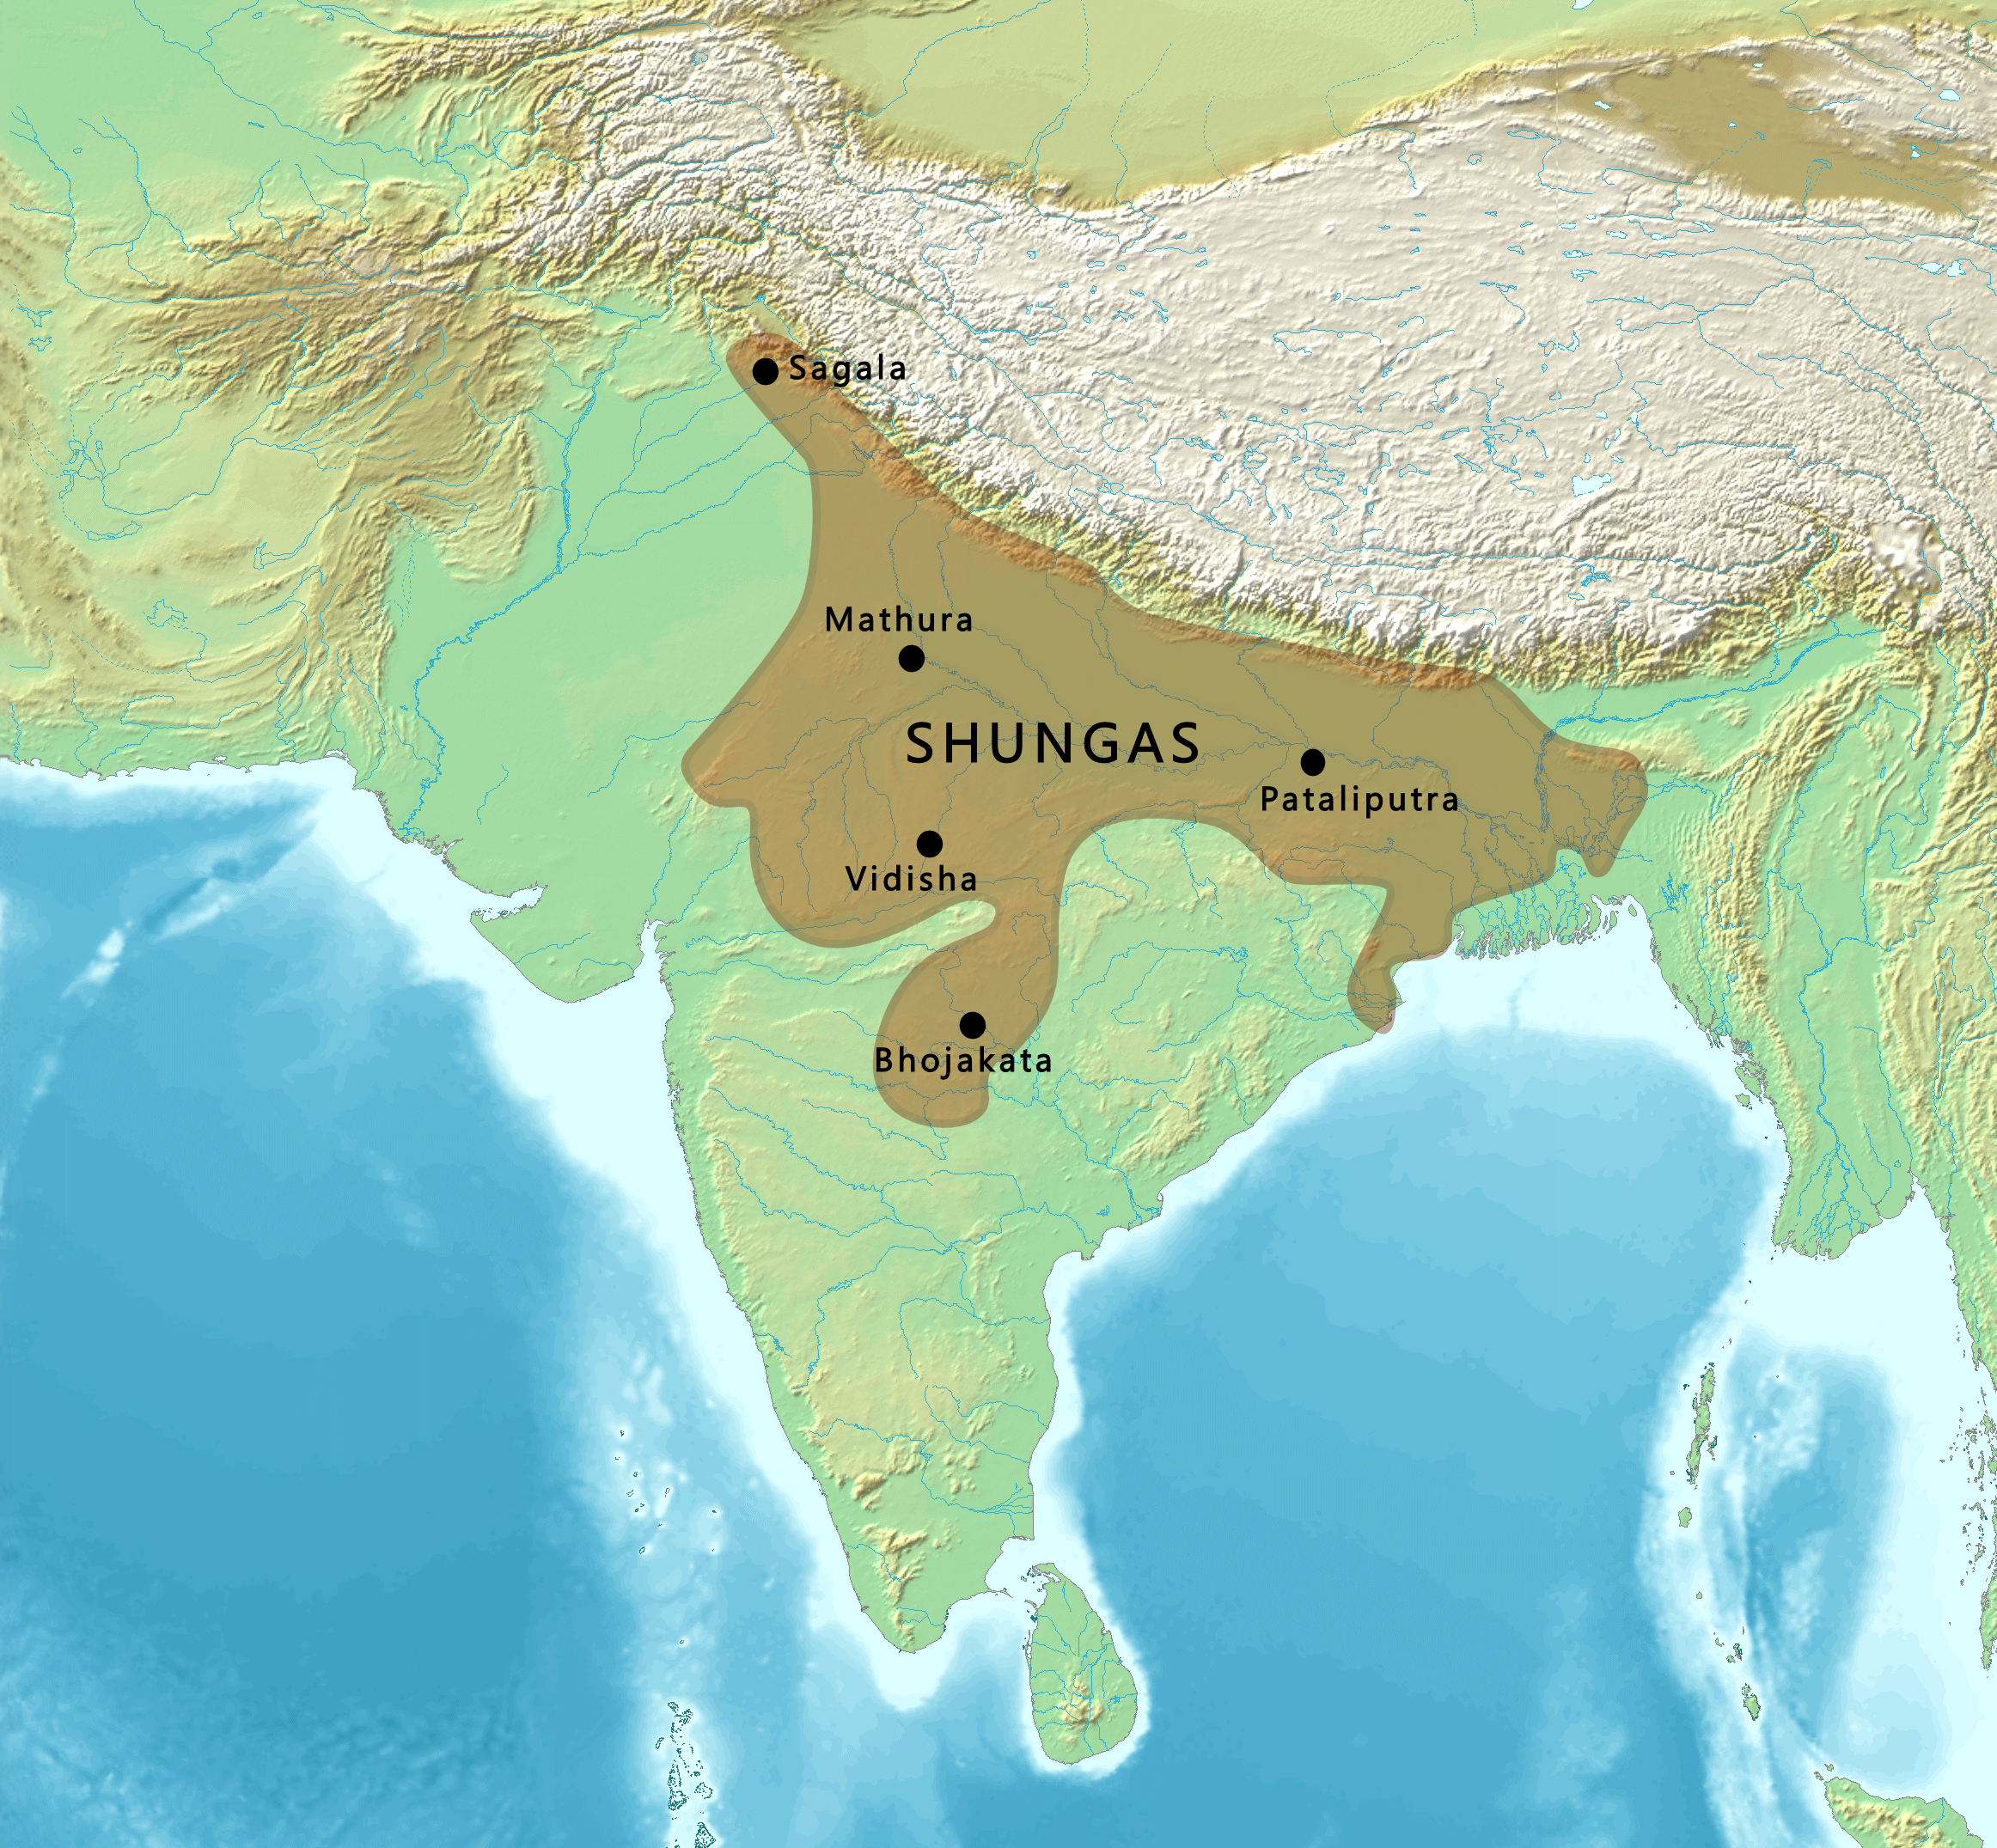 Image and territorial extent of the Sunga Empire 
Pushyamitra Sunga